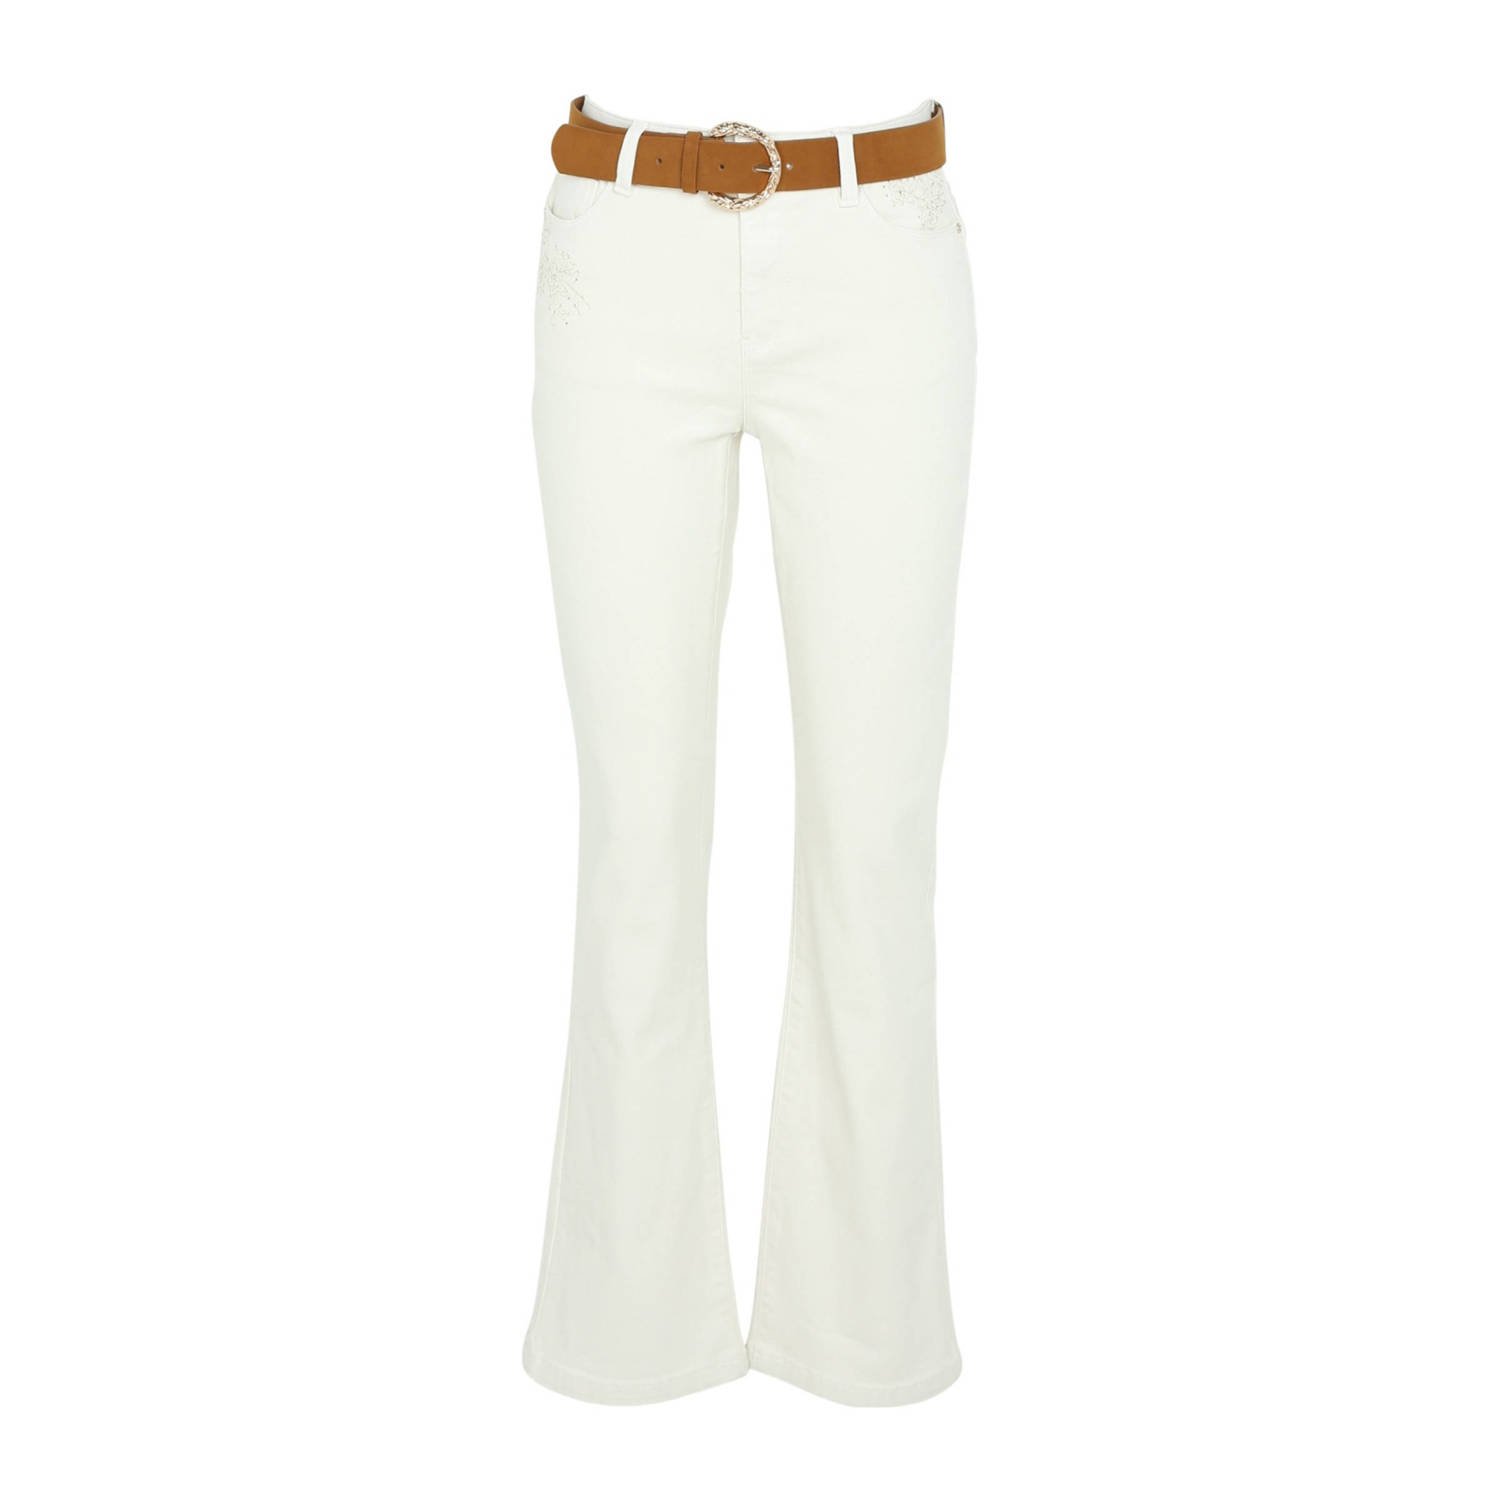 Cassis flared jeans white denim